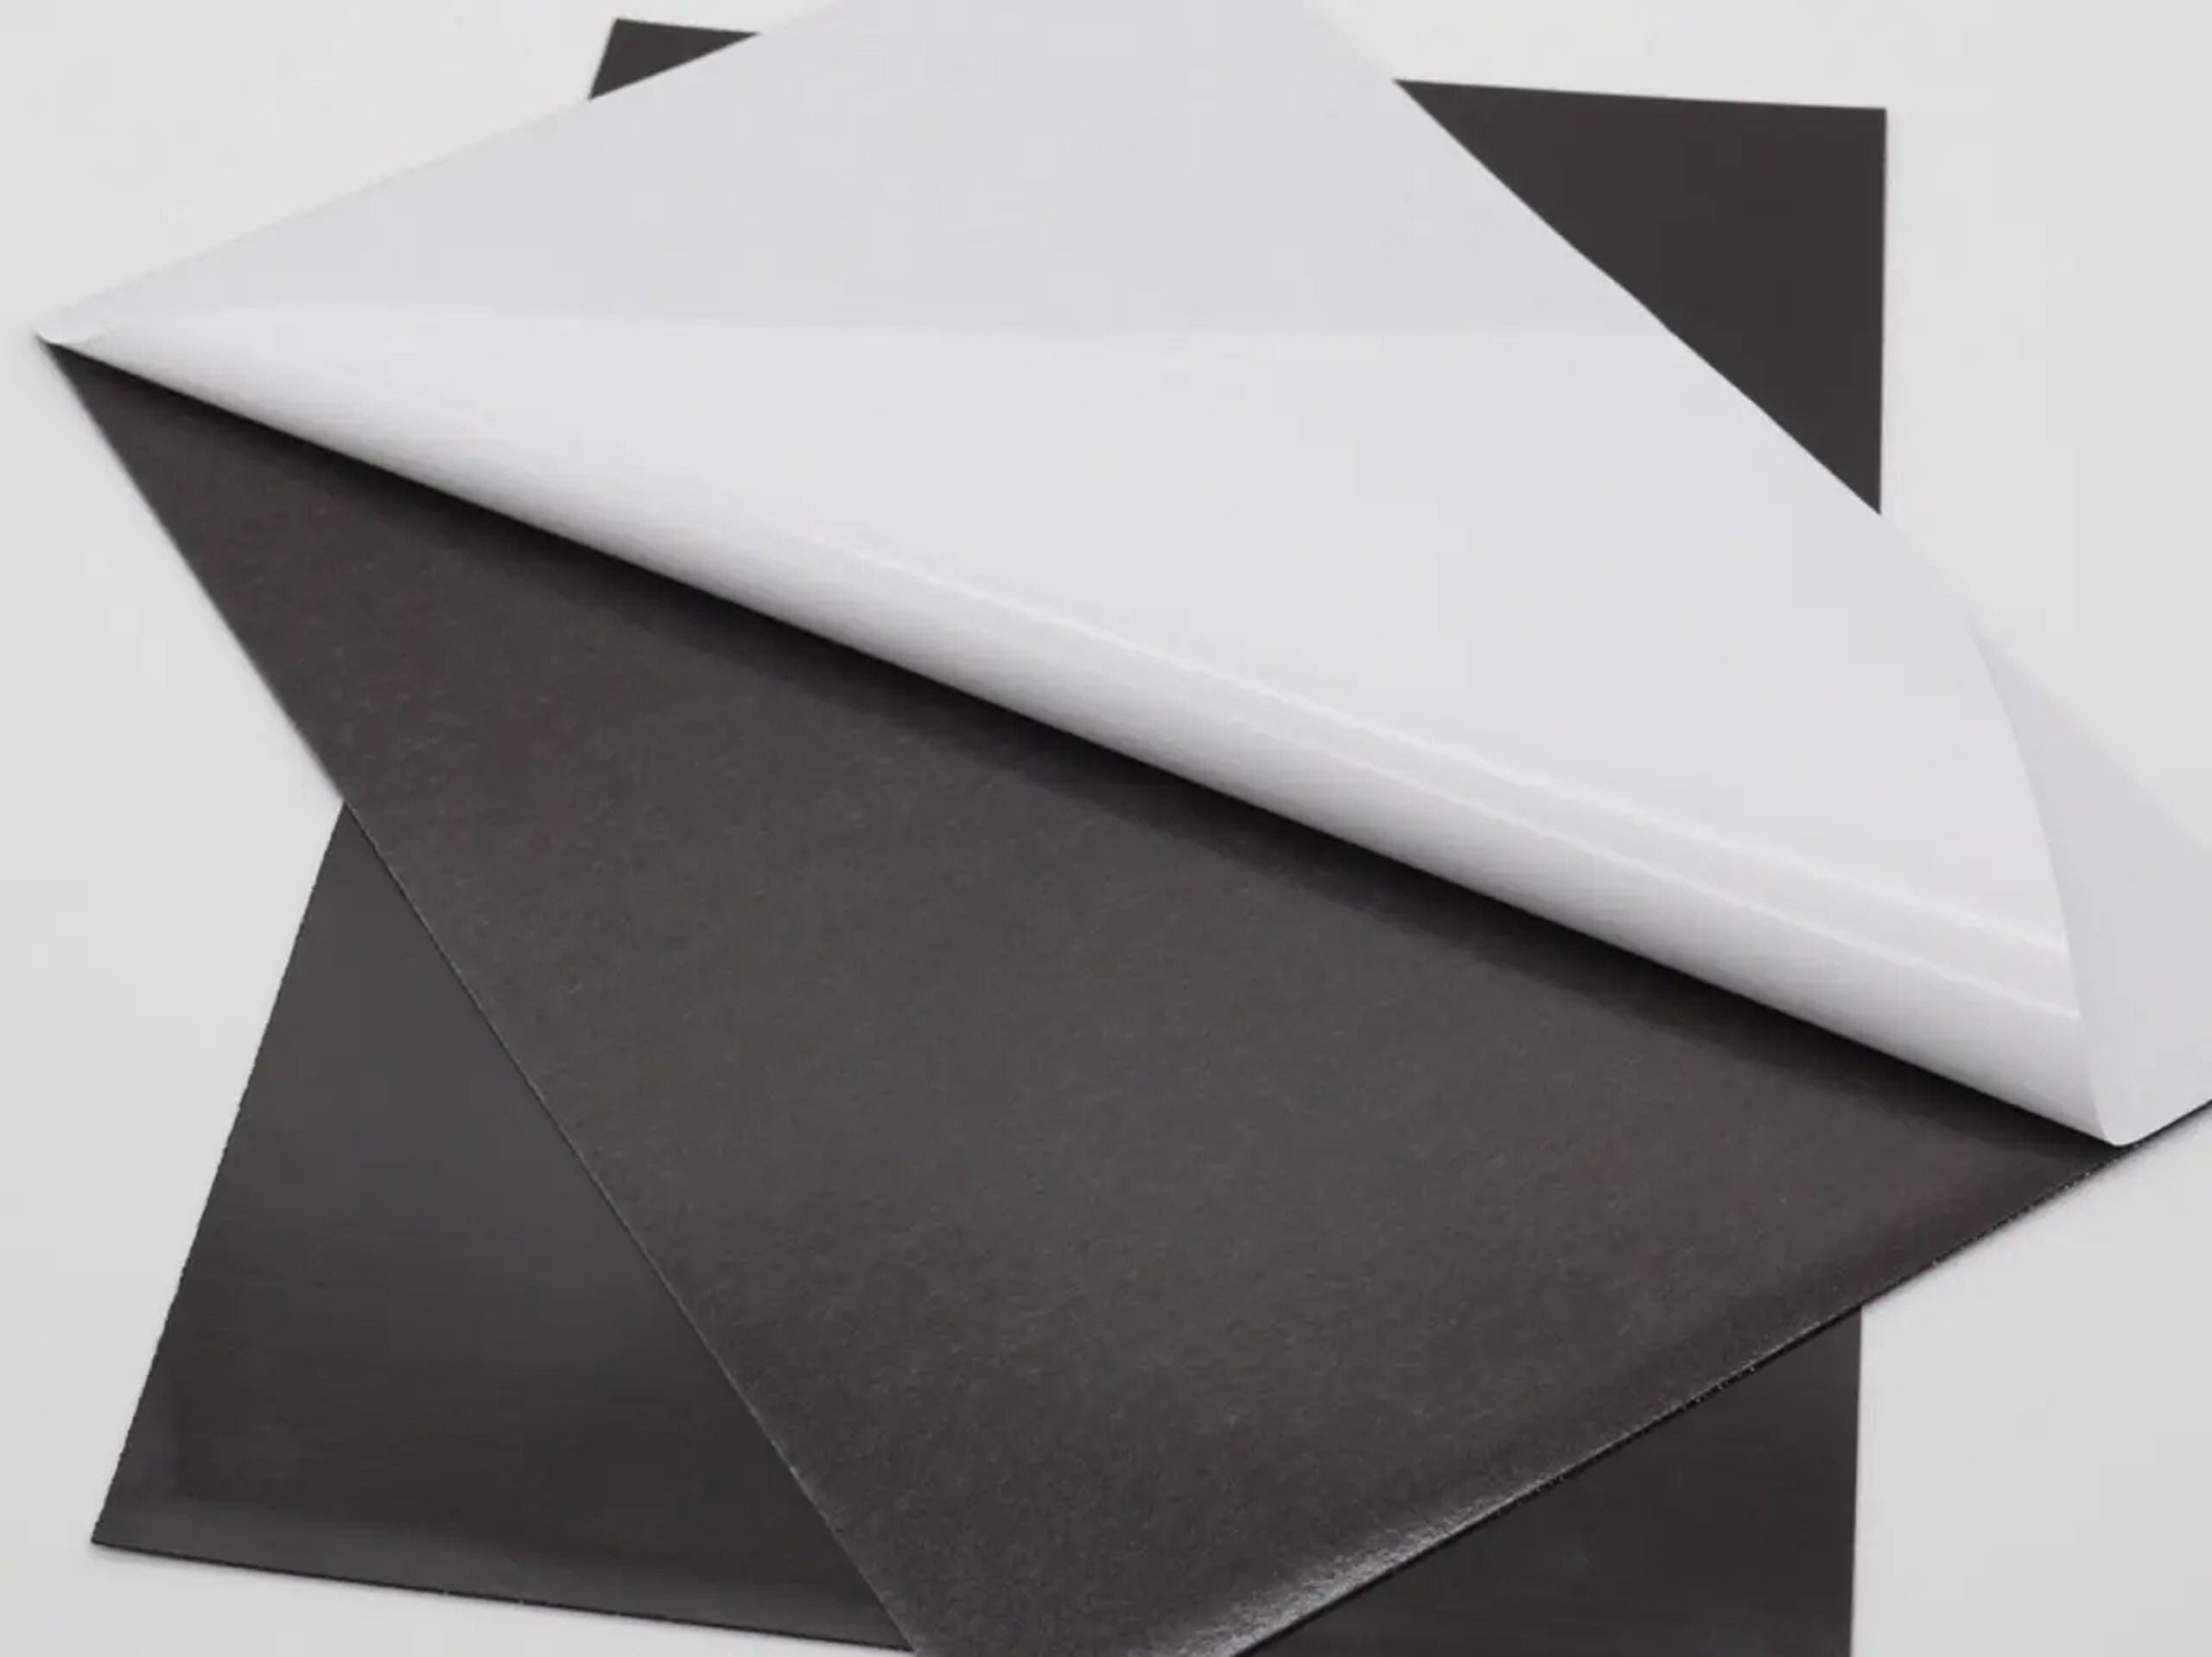 Magnet Sheet, Adhesive Backing, Self-adhesive Magnetic Sheets, Flexible  Magnet, Magnet Sheet A4 0.5 Mm 